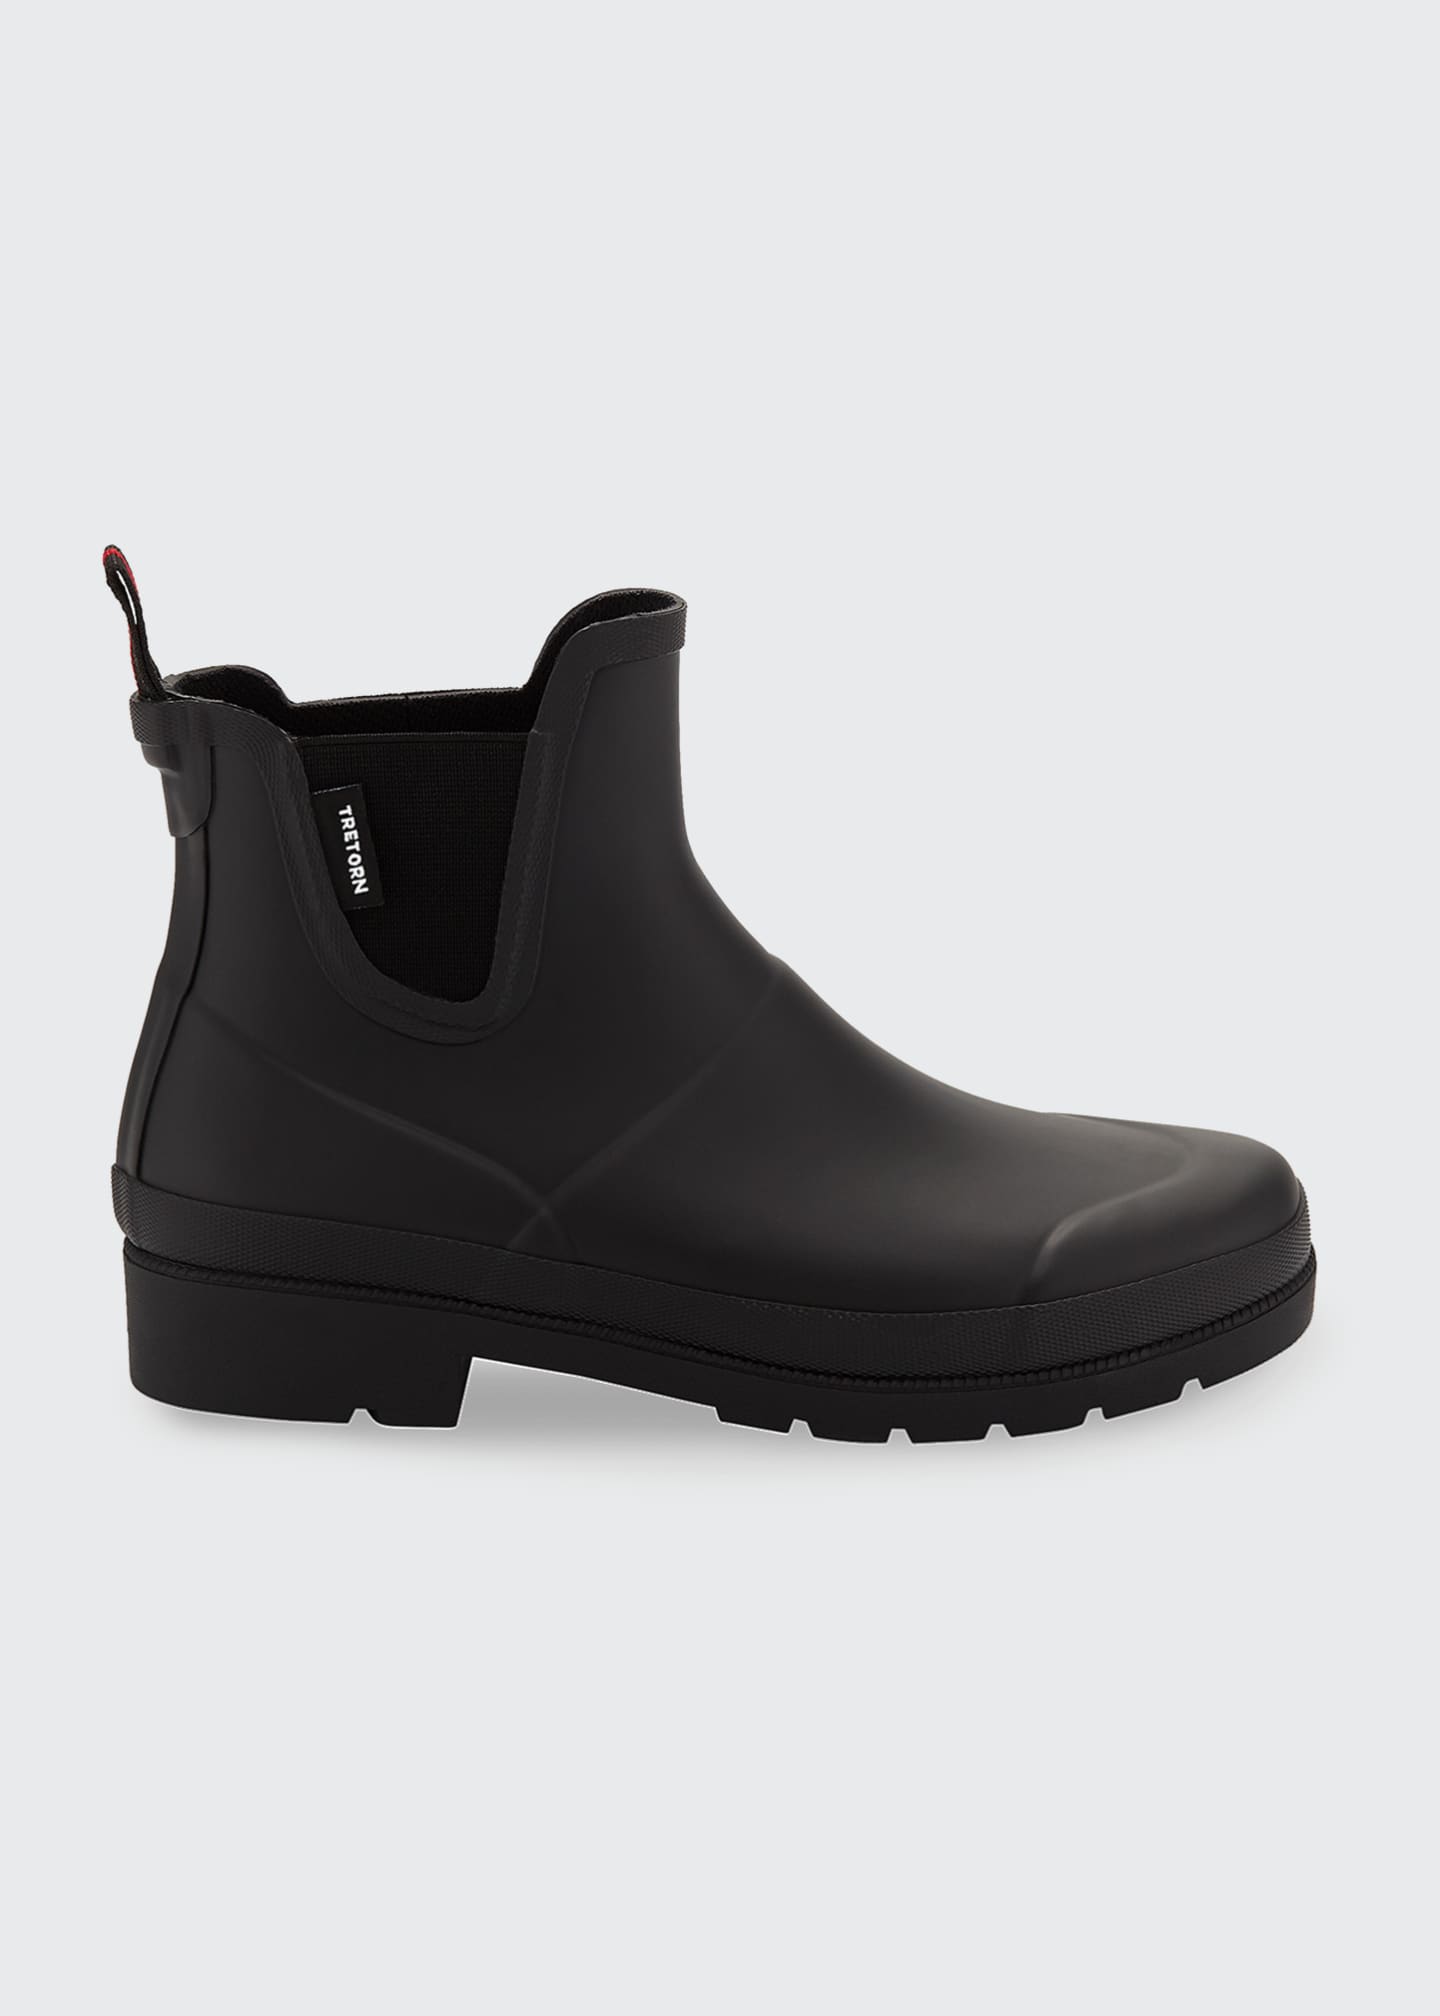 Tretorn Lina Short Rubber Rain Boots - Bergdorf Goodman